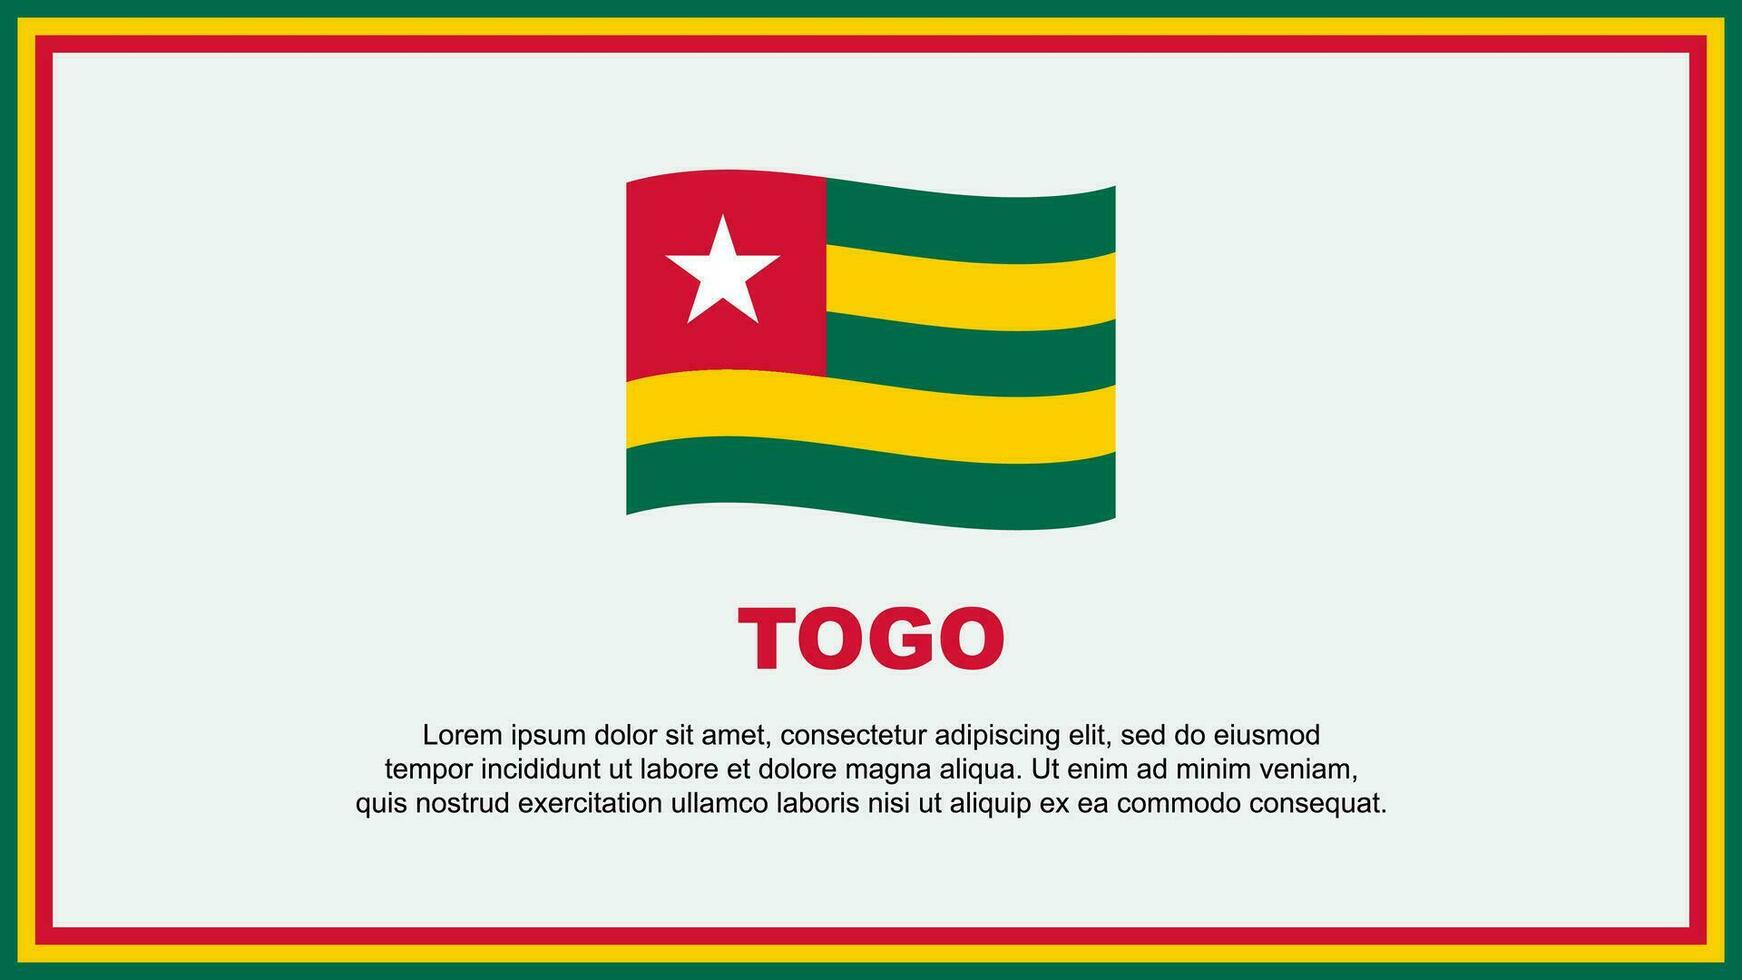 Togo Flag Abstract Background Design Template. Togo Independence Day Banner Social Media Vector Illustration. Togo Banner